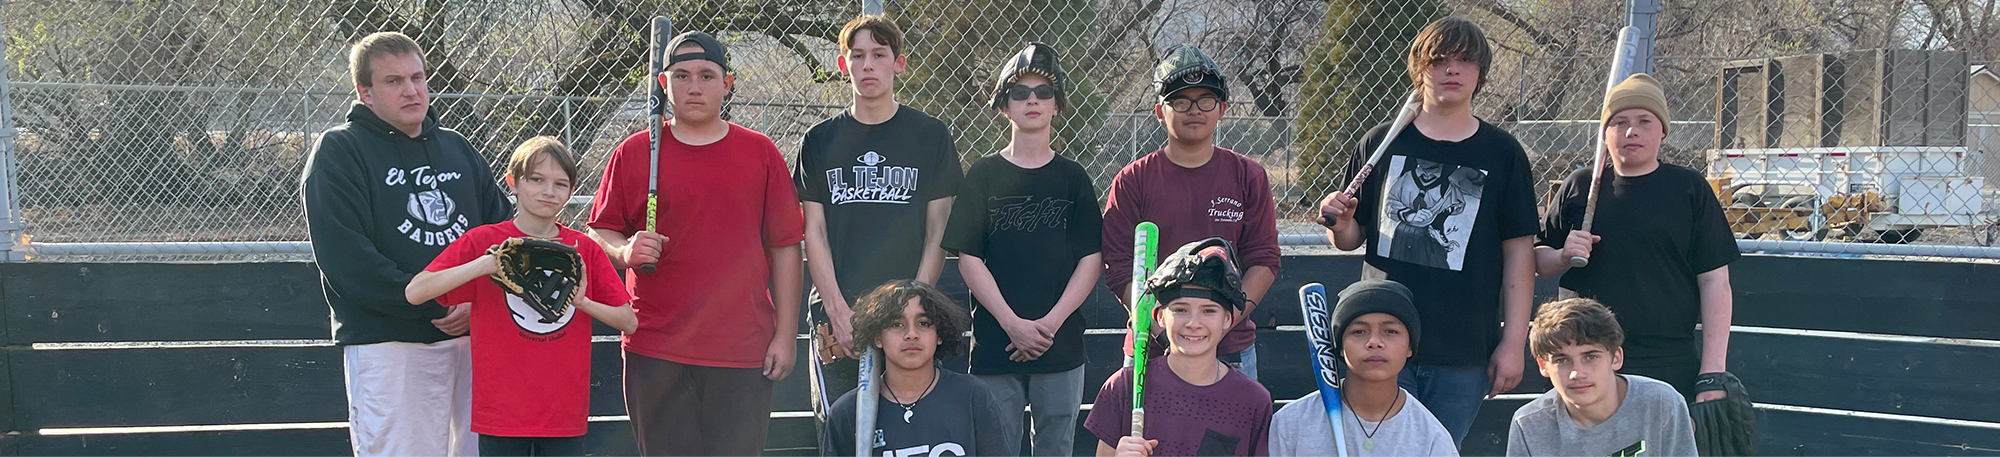 Boys baseball team